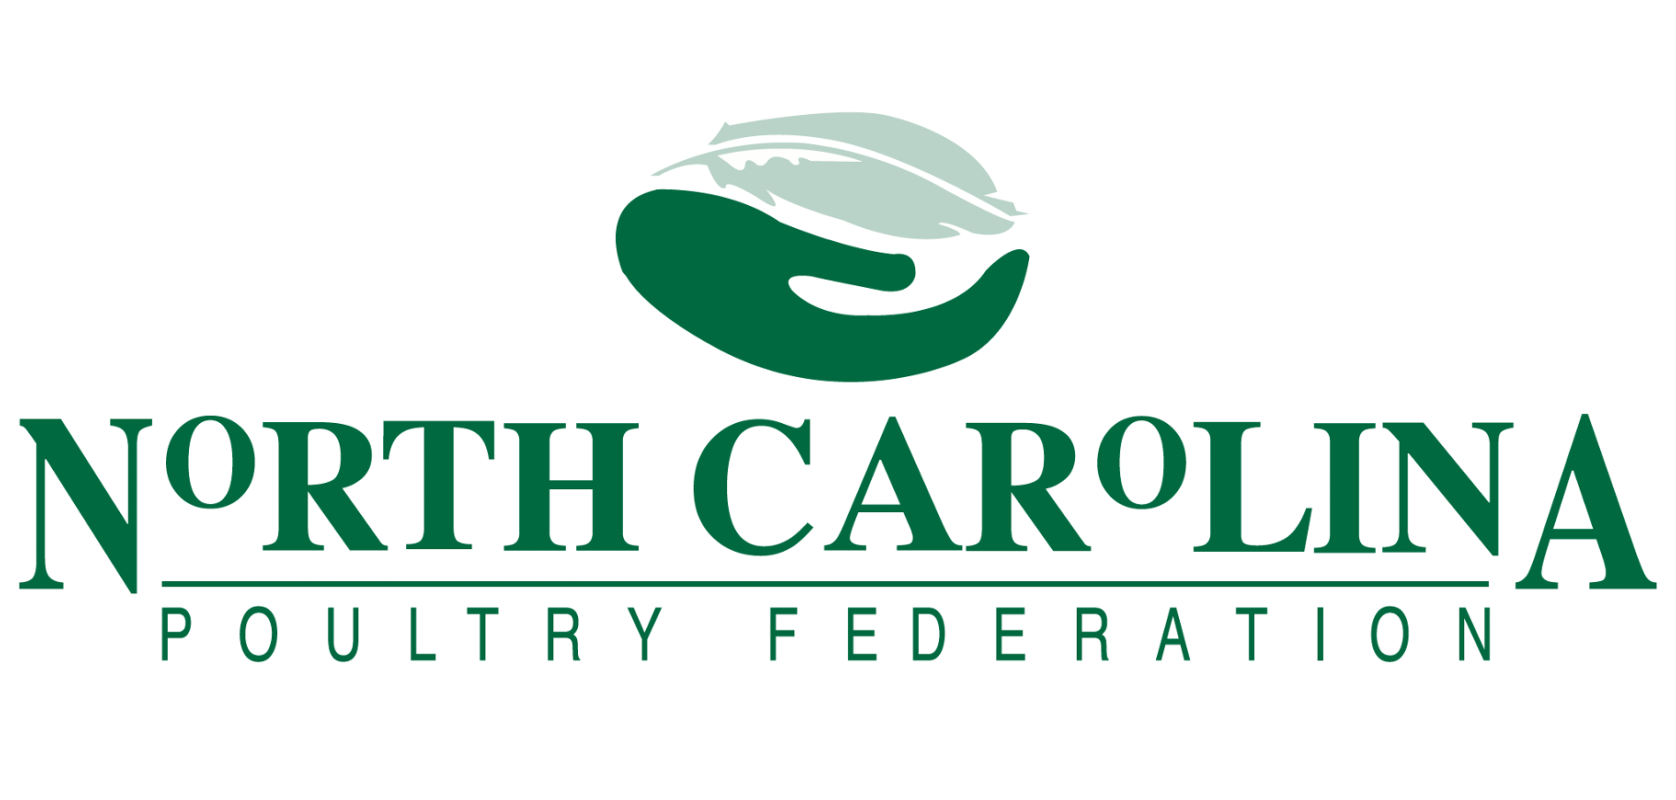 North Carolina Poultry Federation logo.